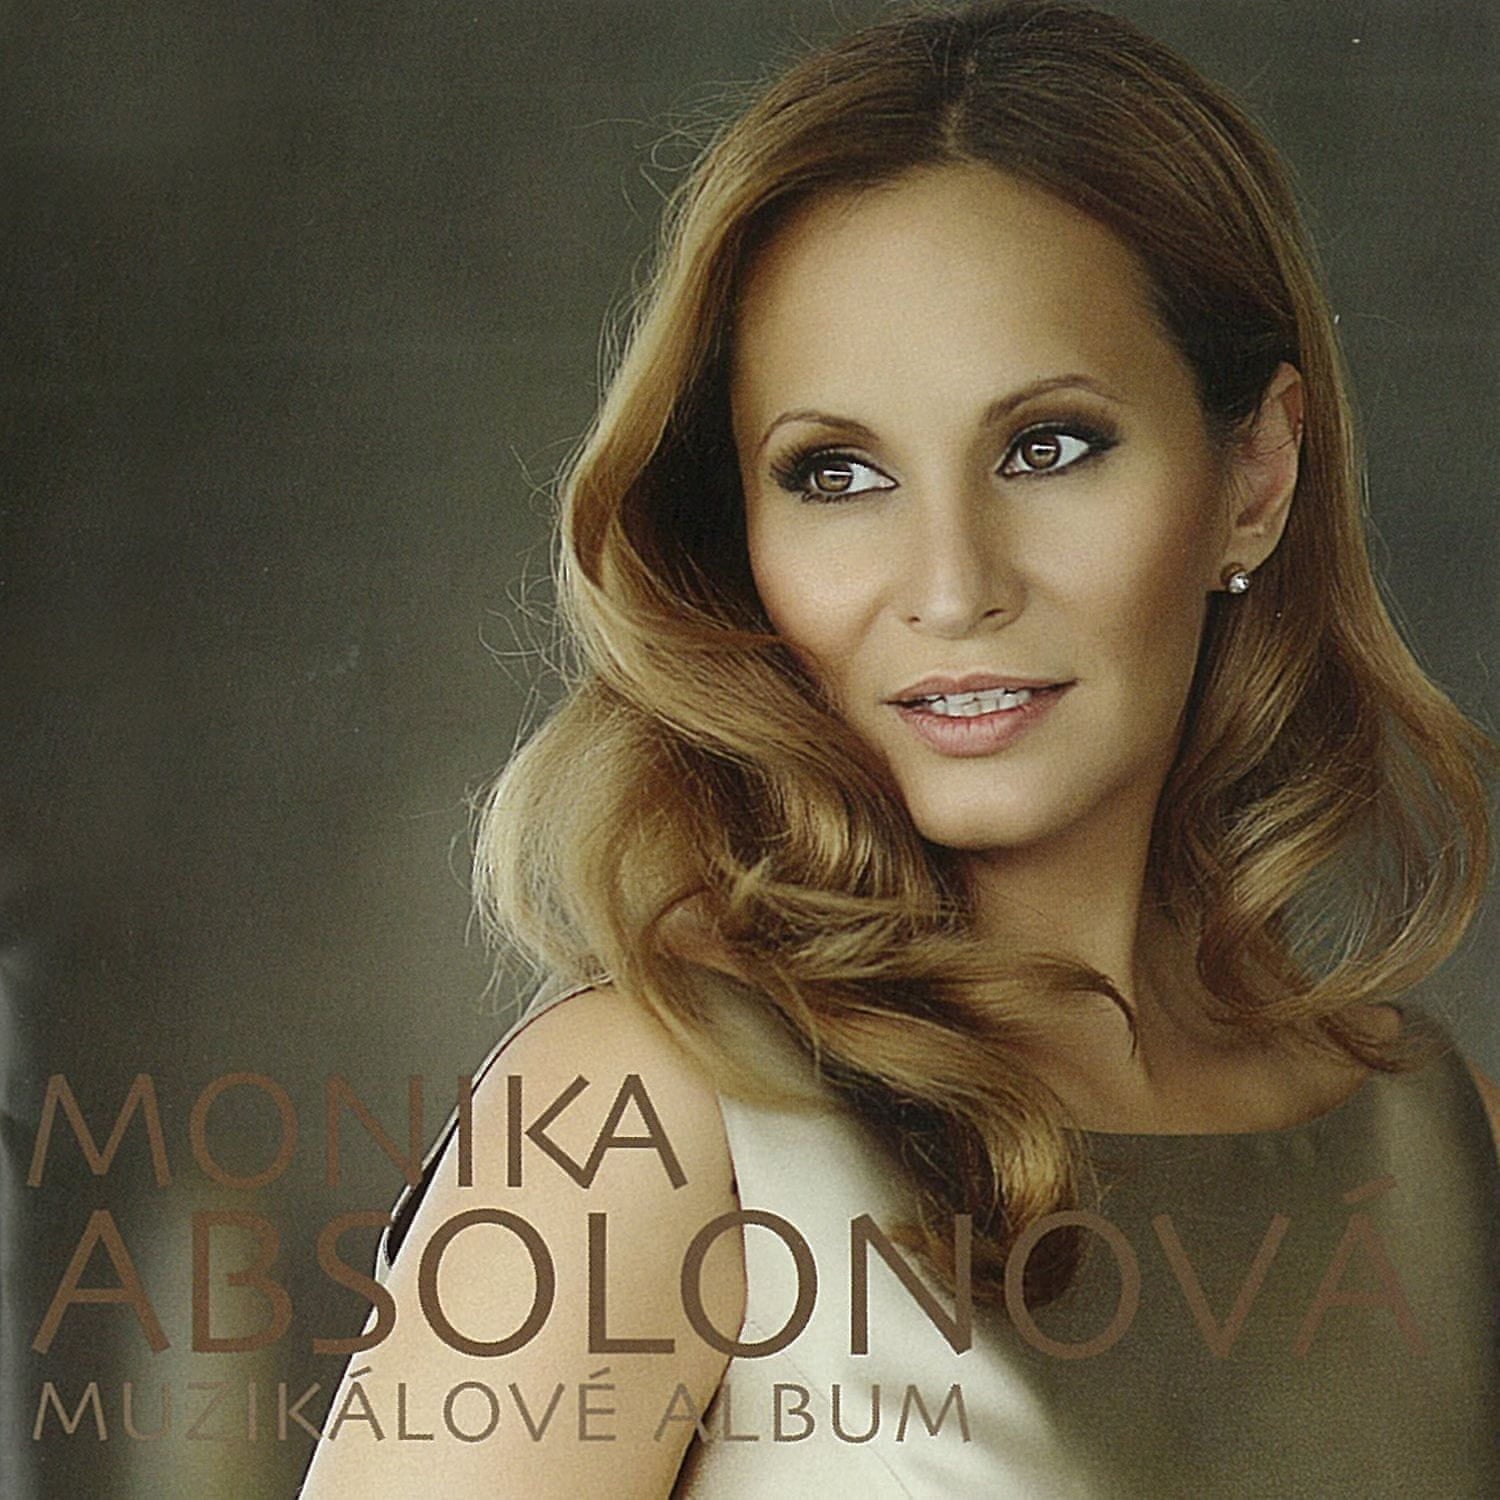 Monika Absolonova : Muzikalove album CD